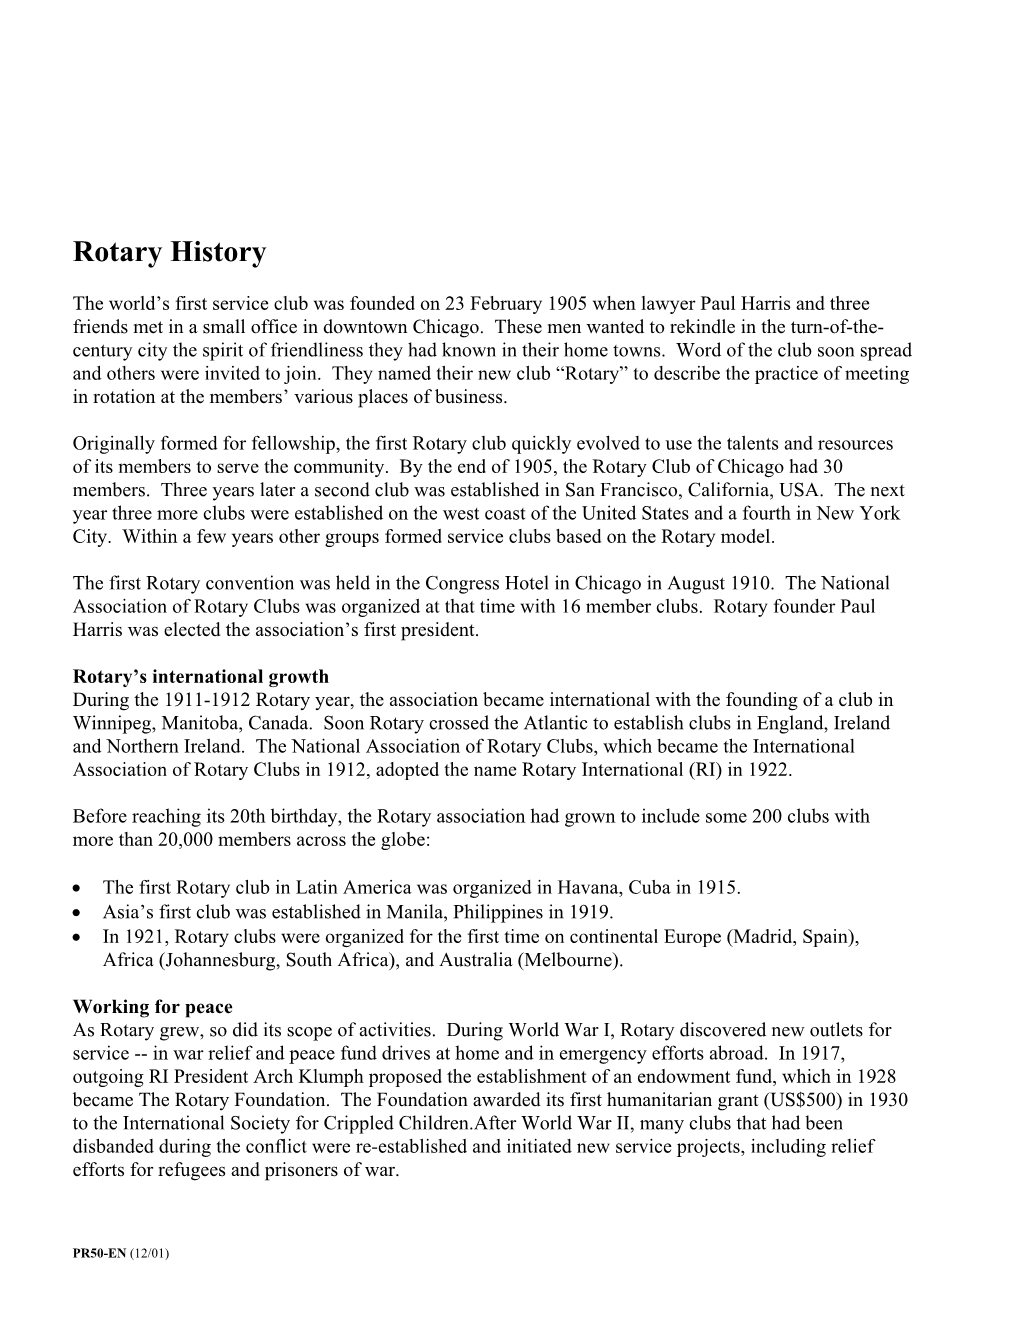 A Brief History of Rotary International